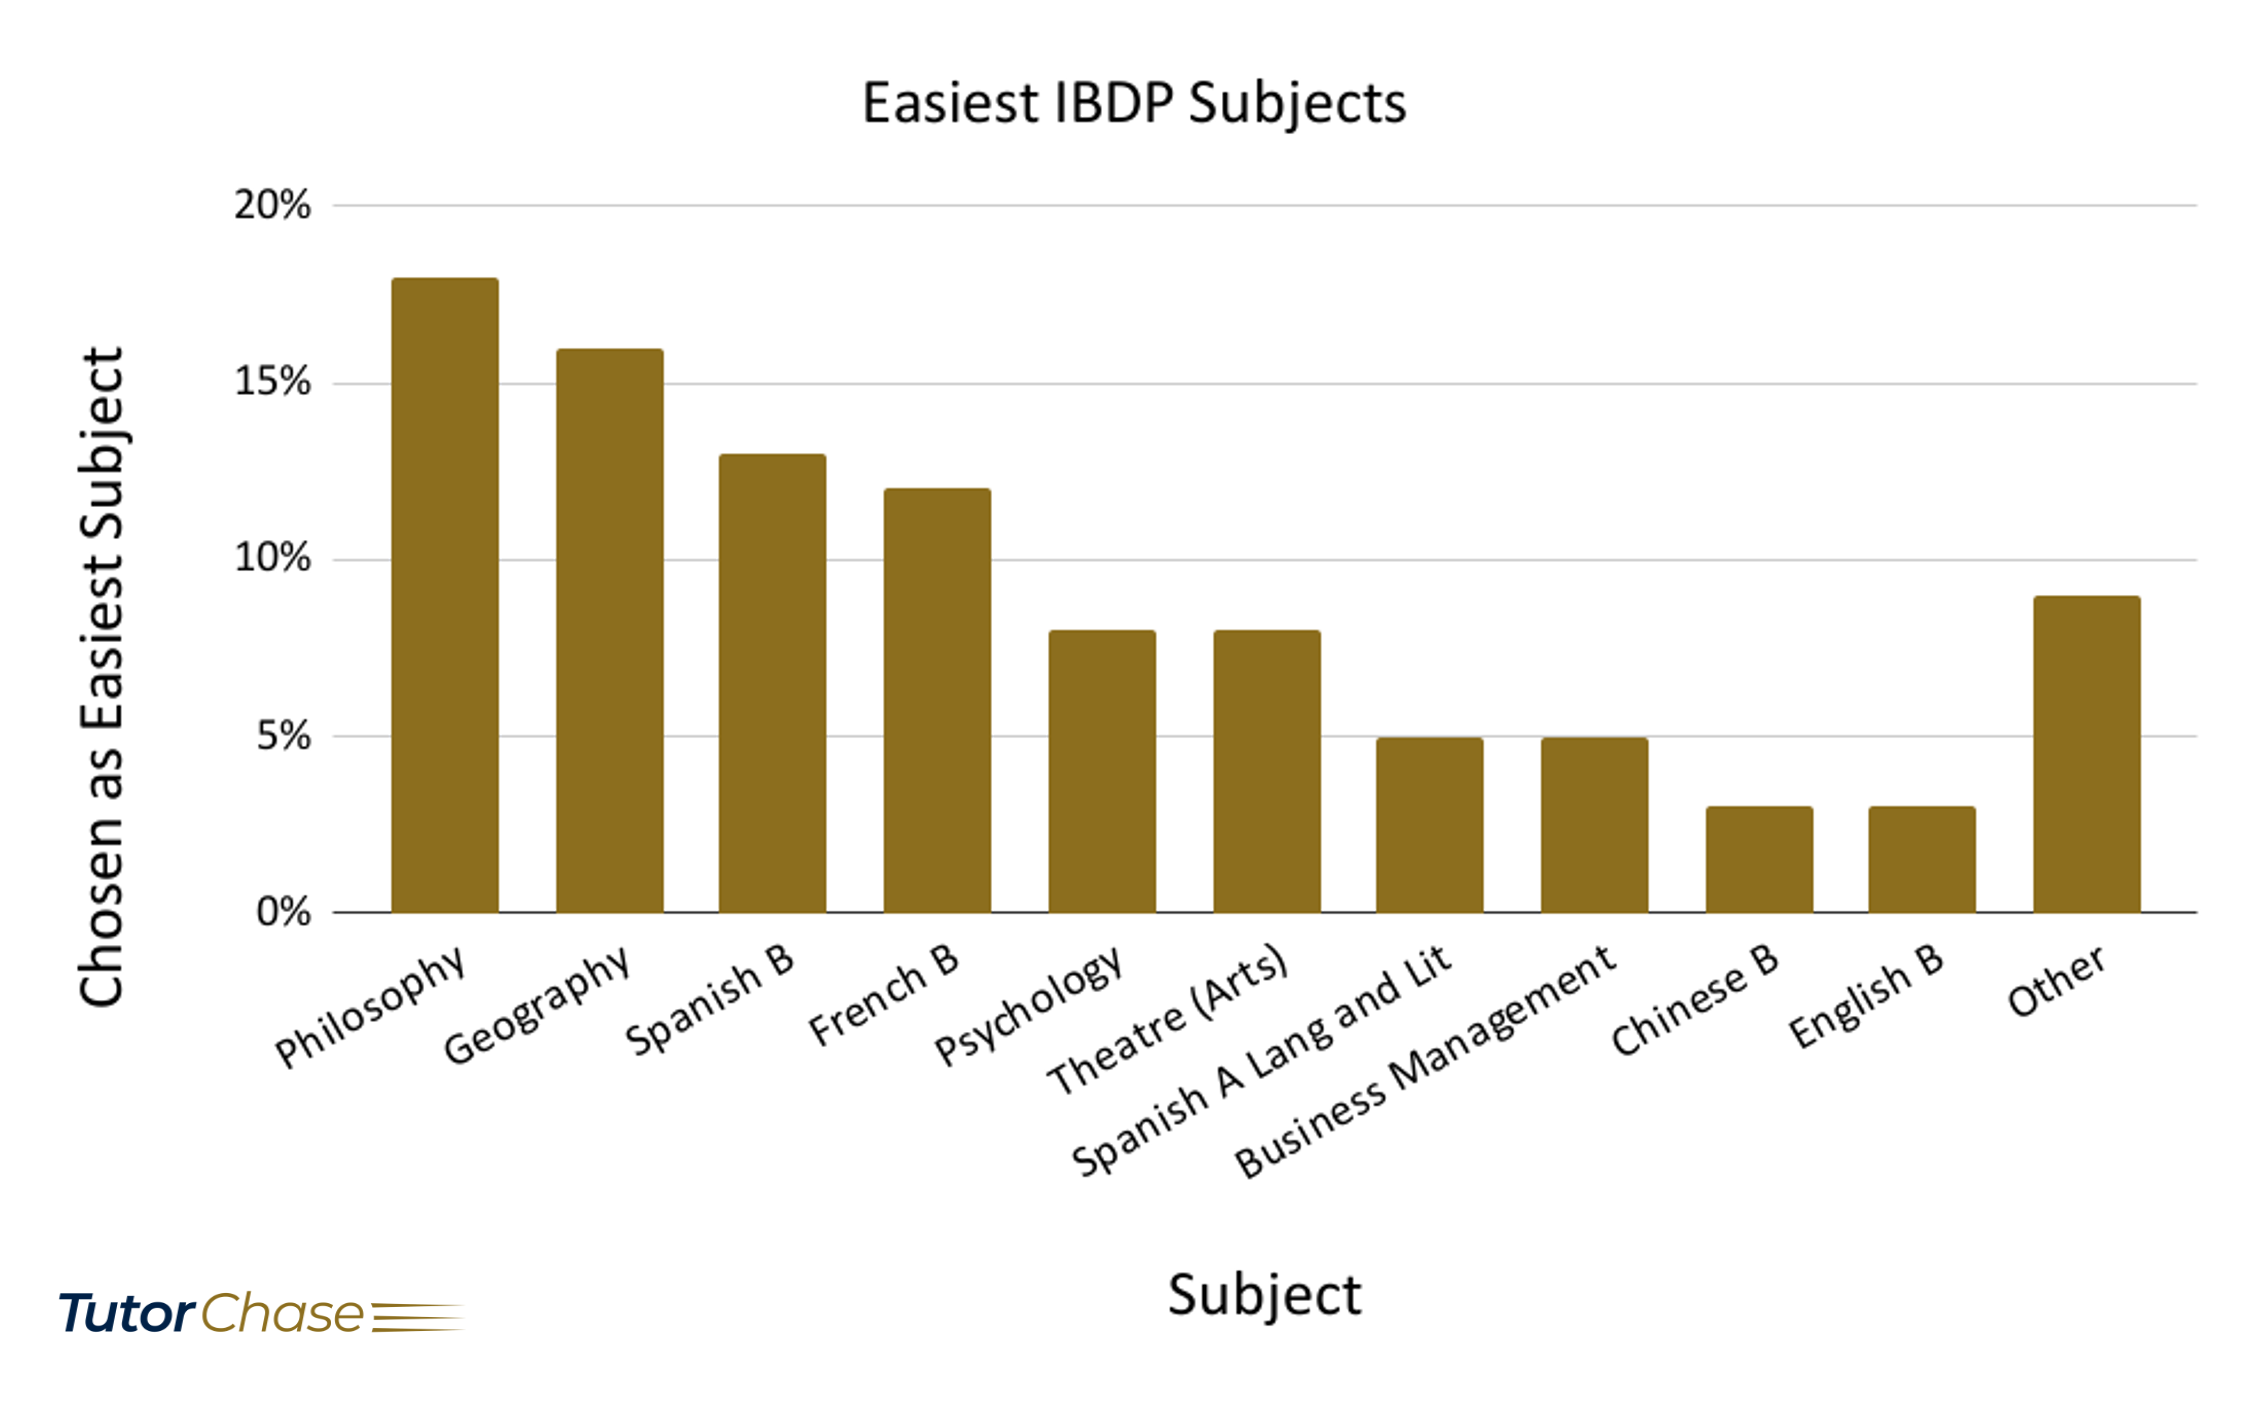 Top 10 Easiest IBDP Subjects